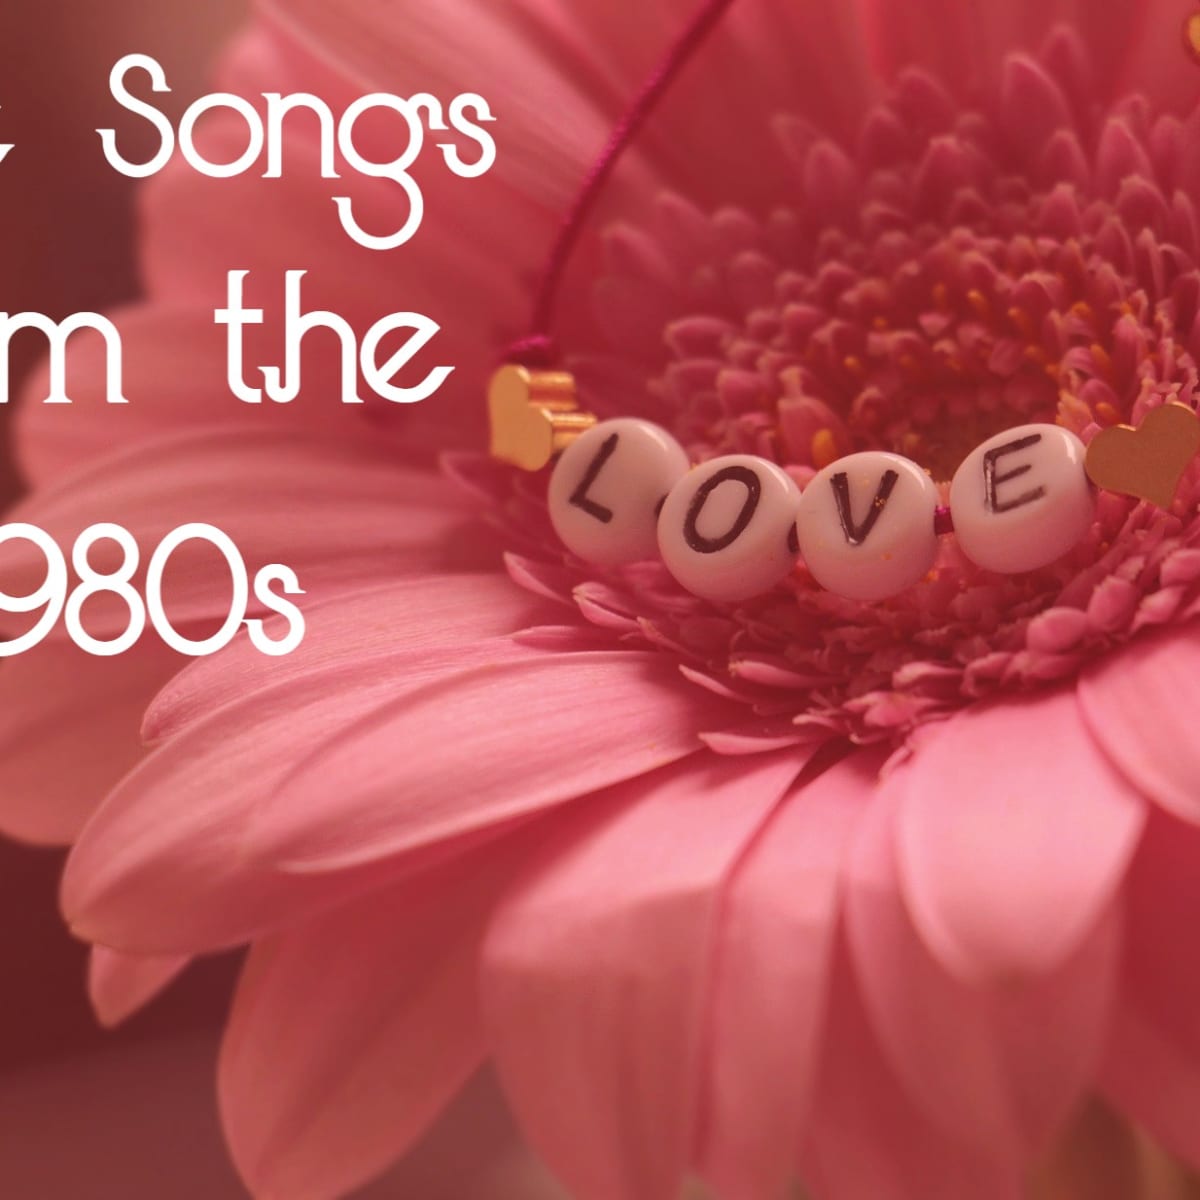 1980 rock love songs